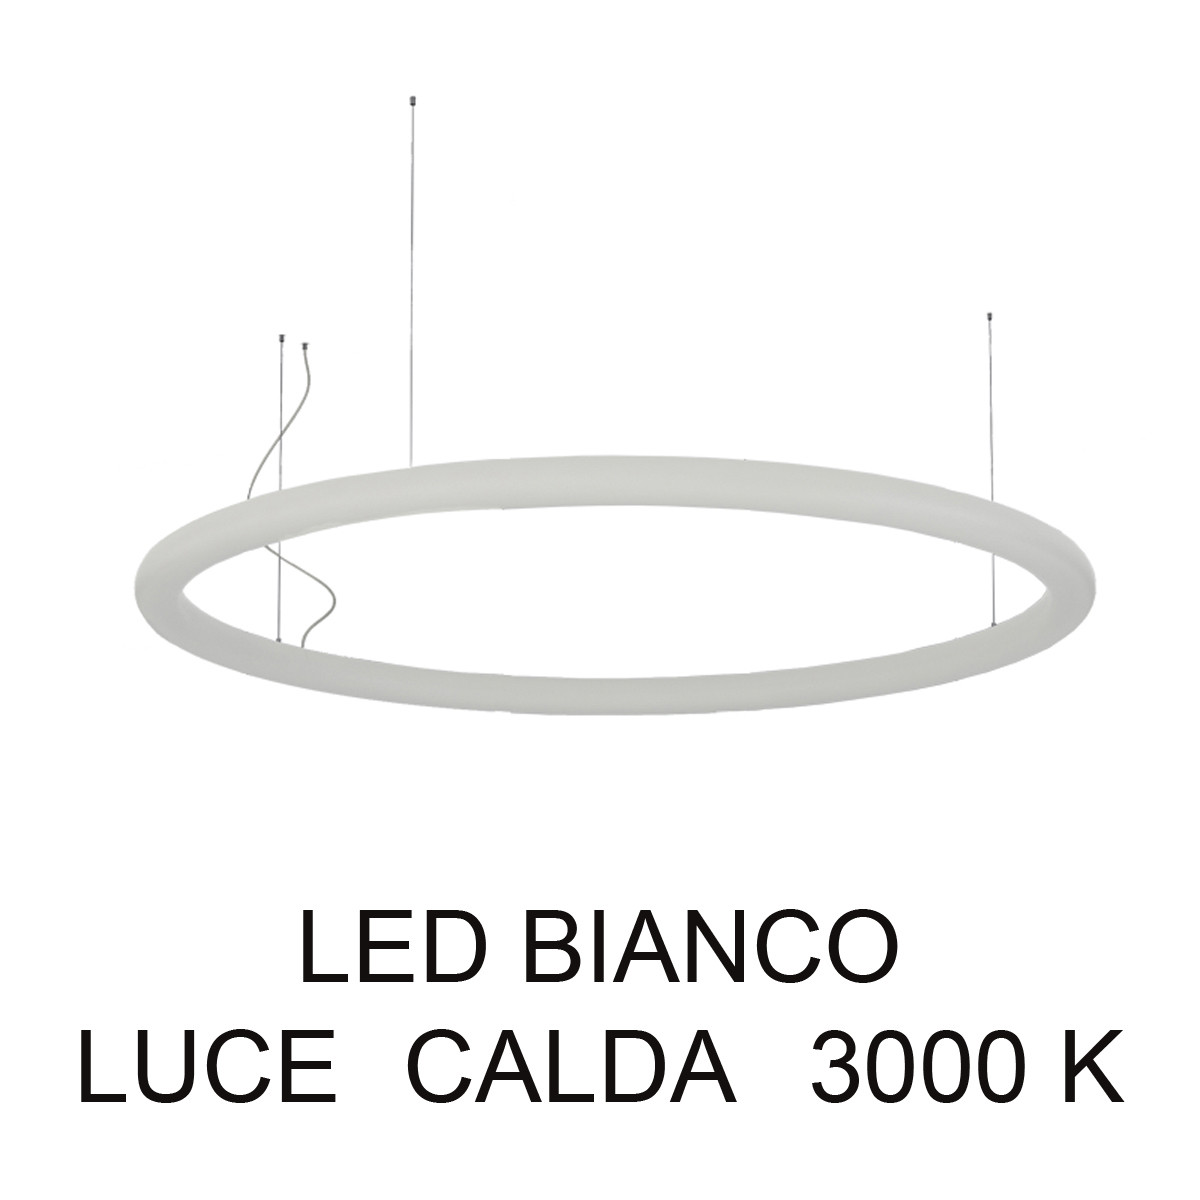 LP GTT141 - Ø 140 / 7 - Led bianco luce calda (3000 k) (+€ 192,00)